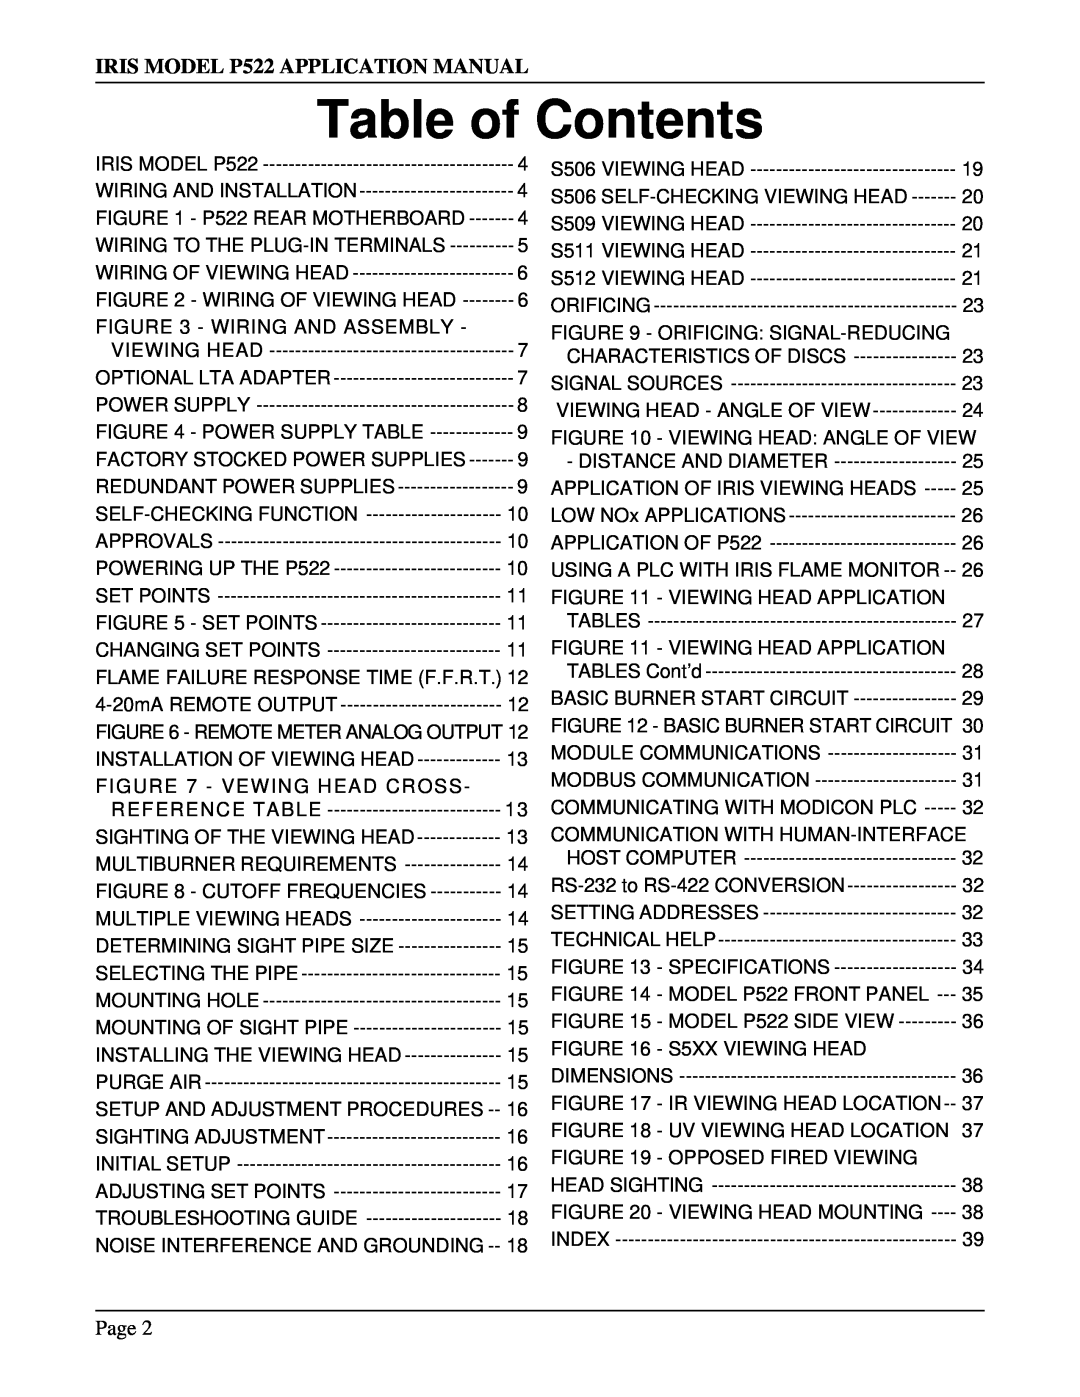 IRIS manual Table of Contents, IRIS MODEL P522 APPLICATION MANUAL 